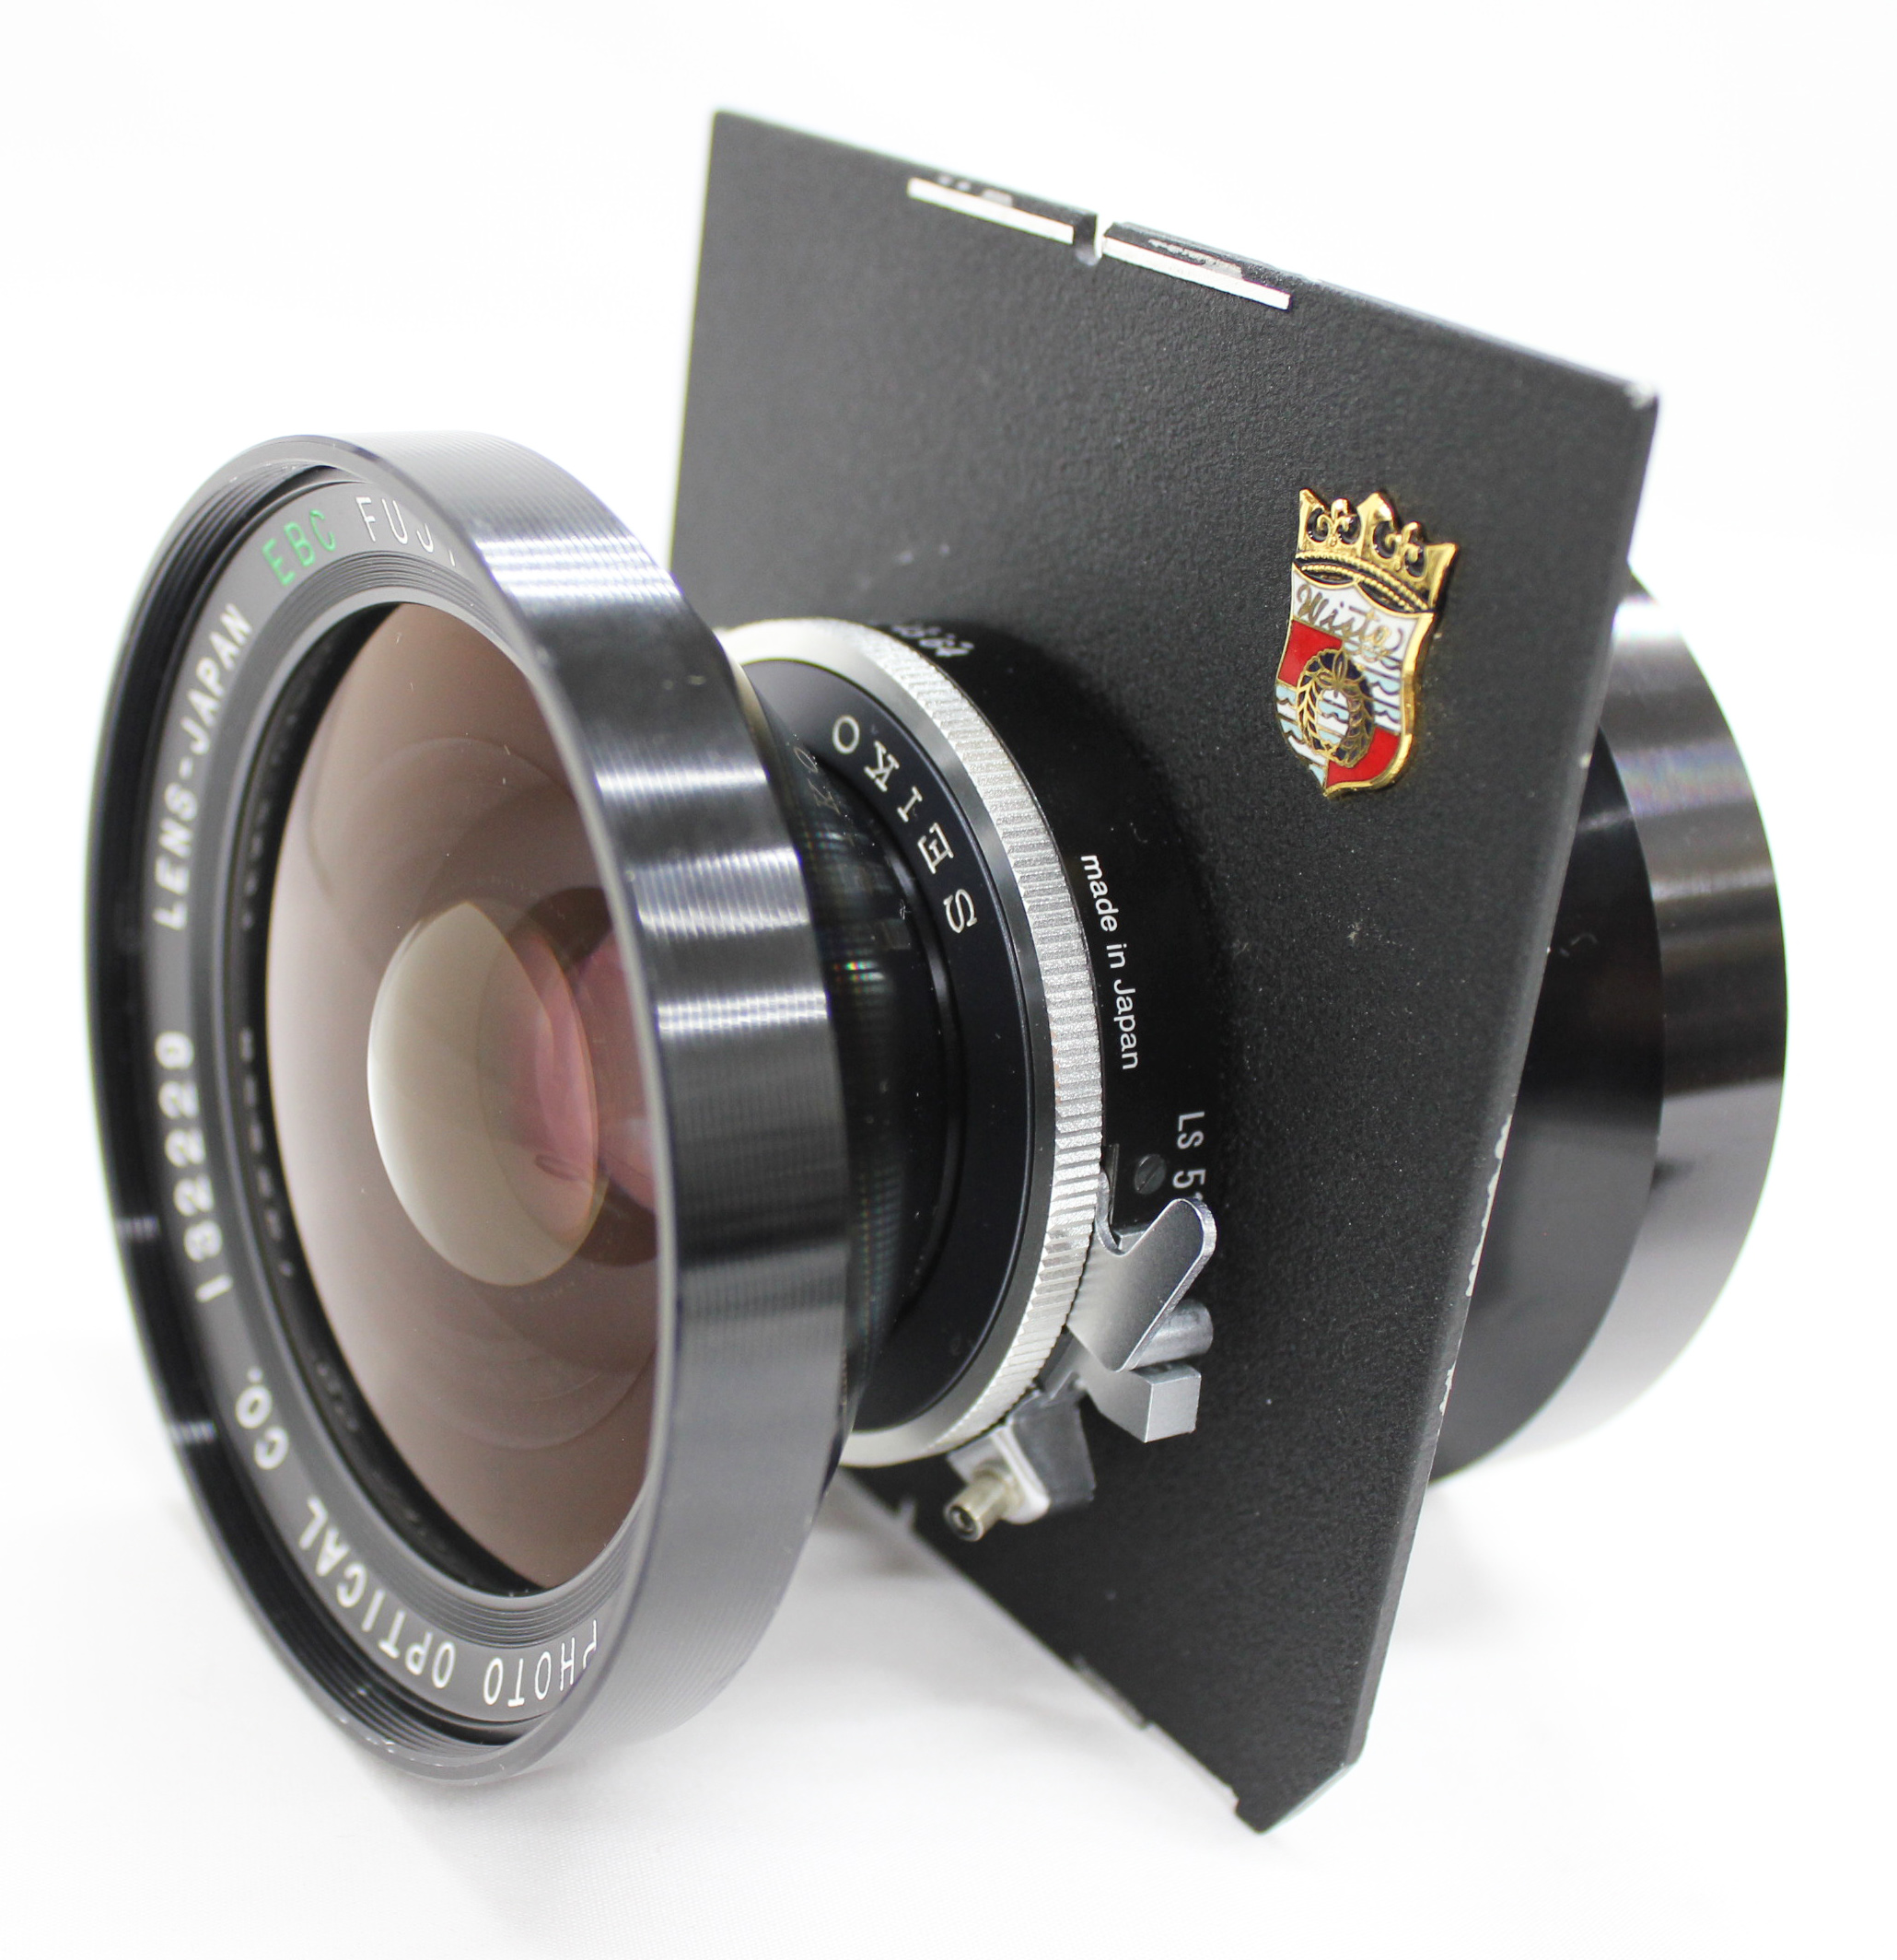 Fuji EBC Fujinon SWD 90mm F/5.6 4x5 Large Format Lens with Seiko ...